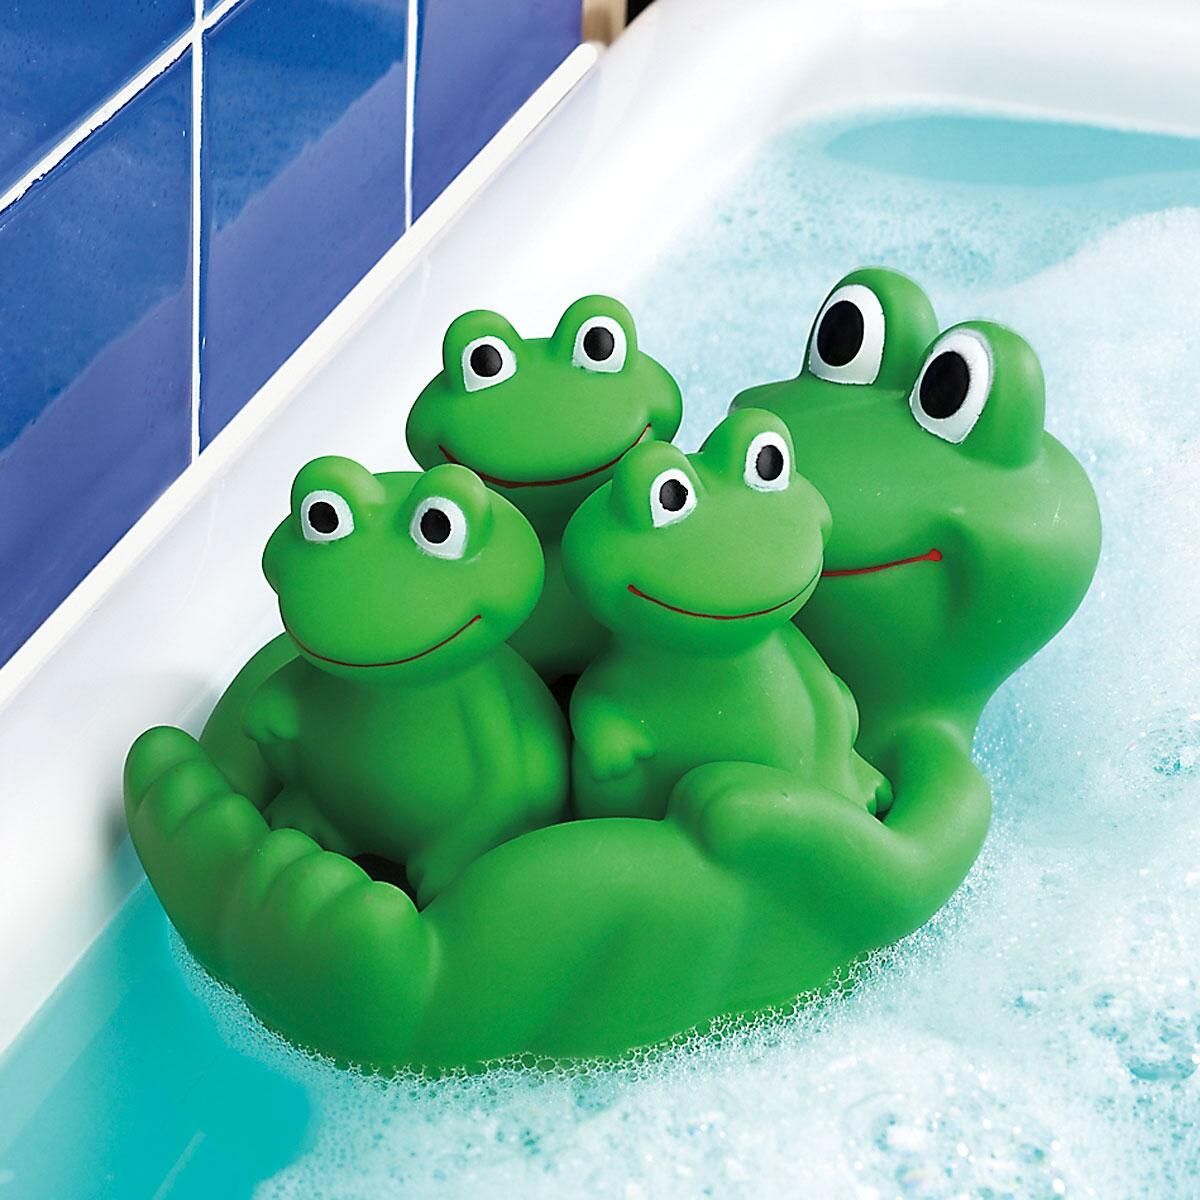 frog bath toy holder